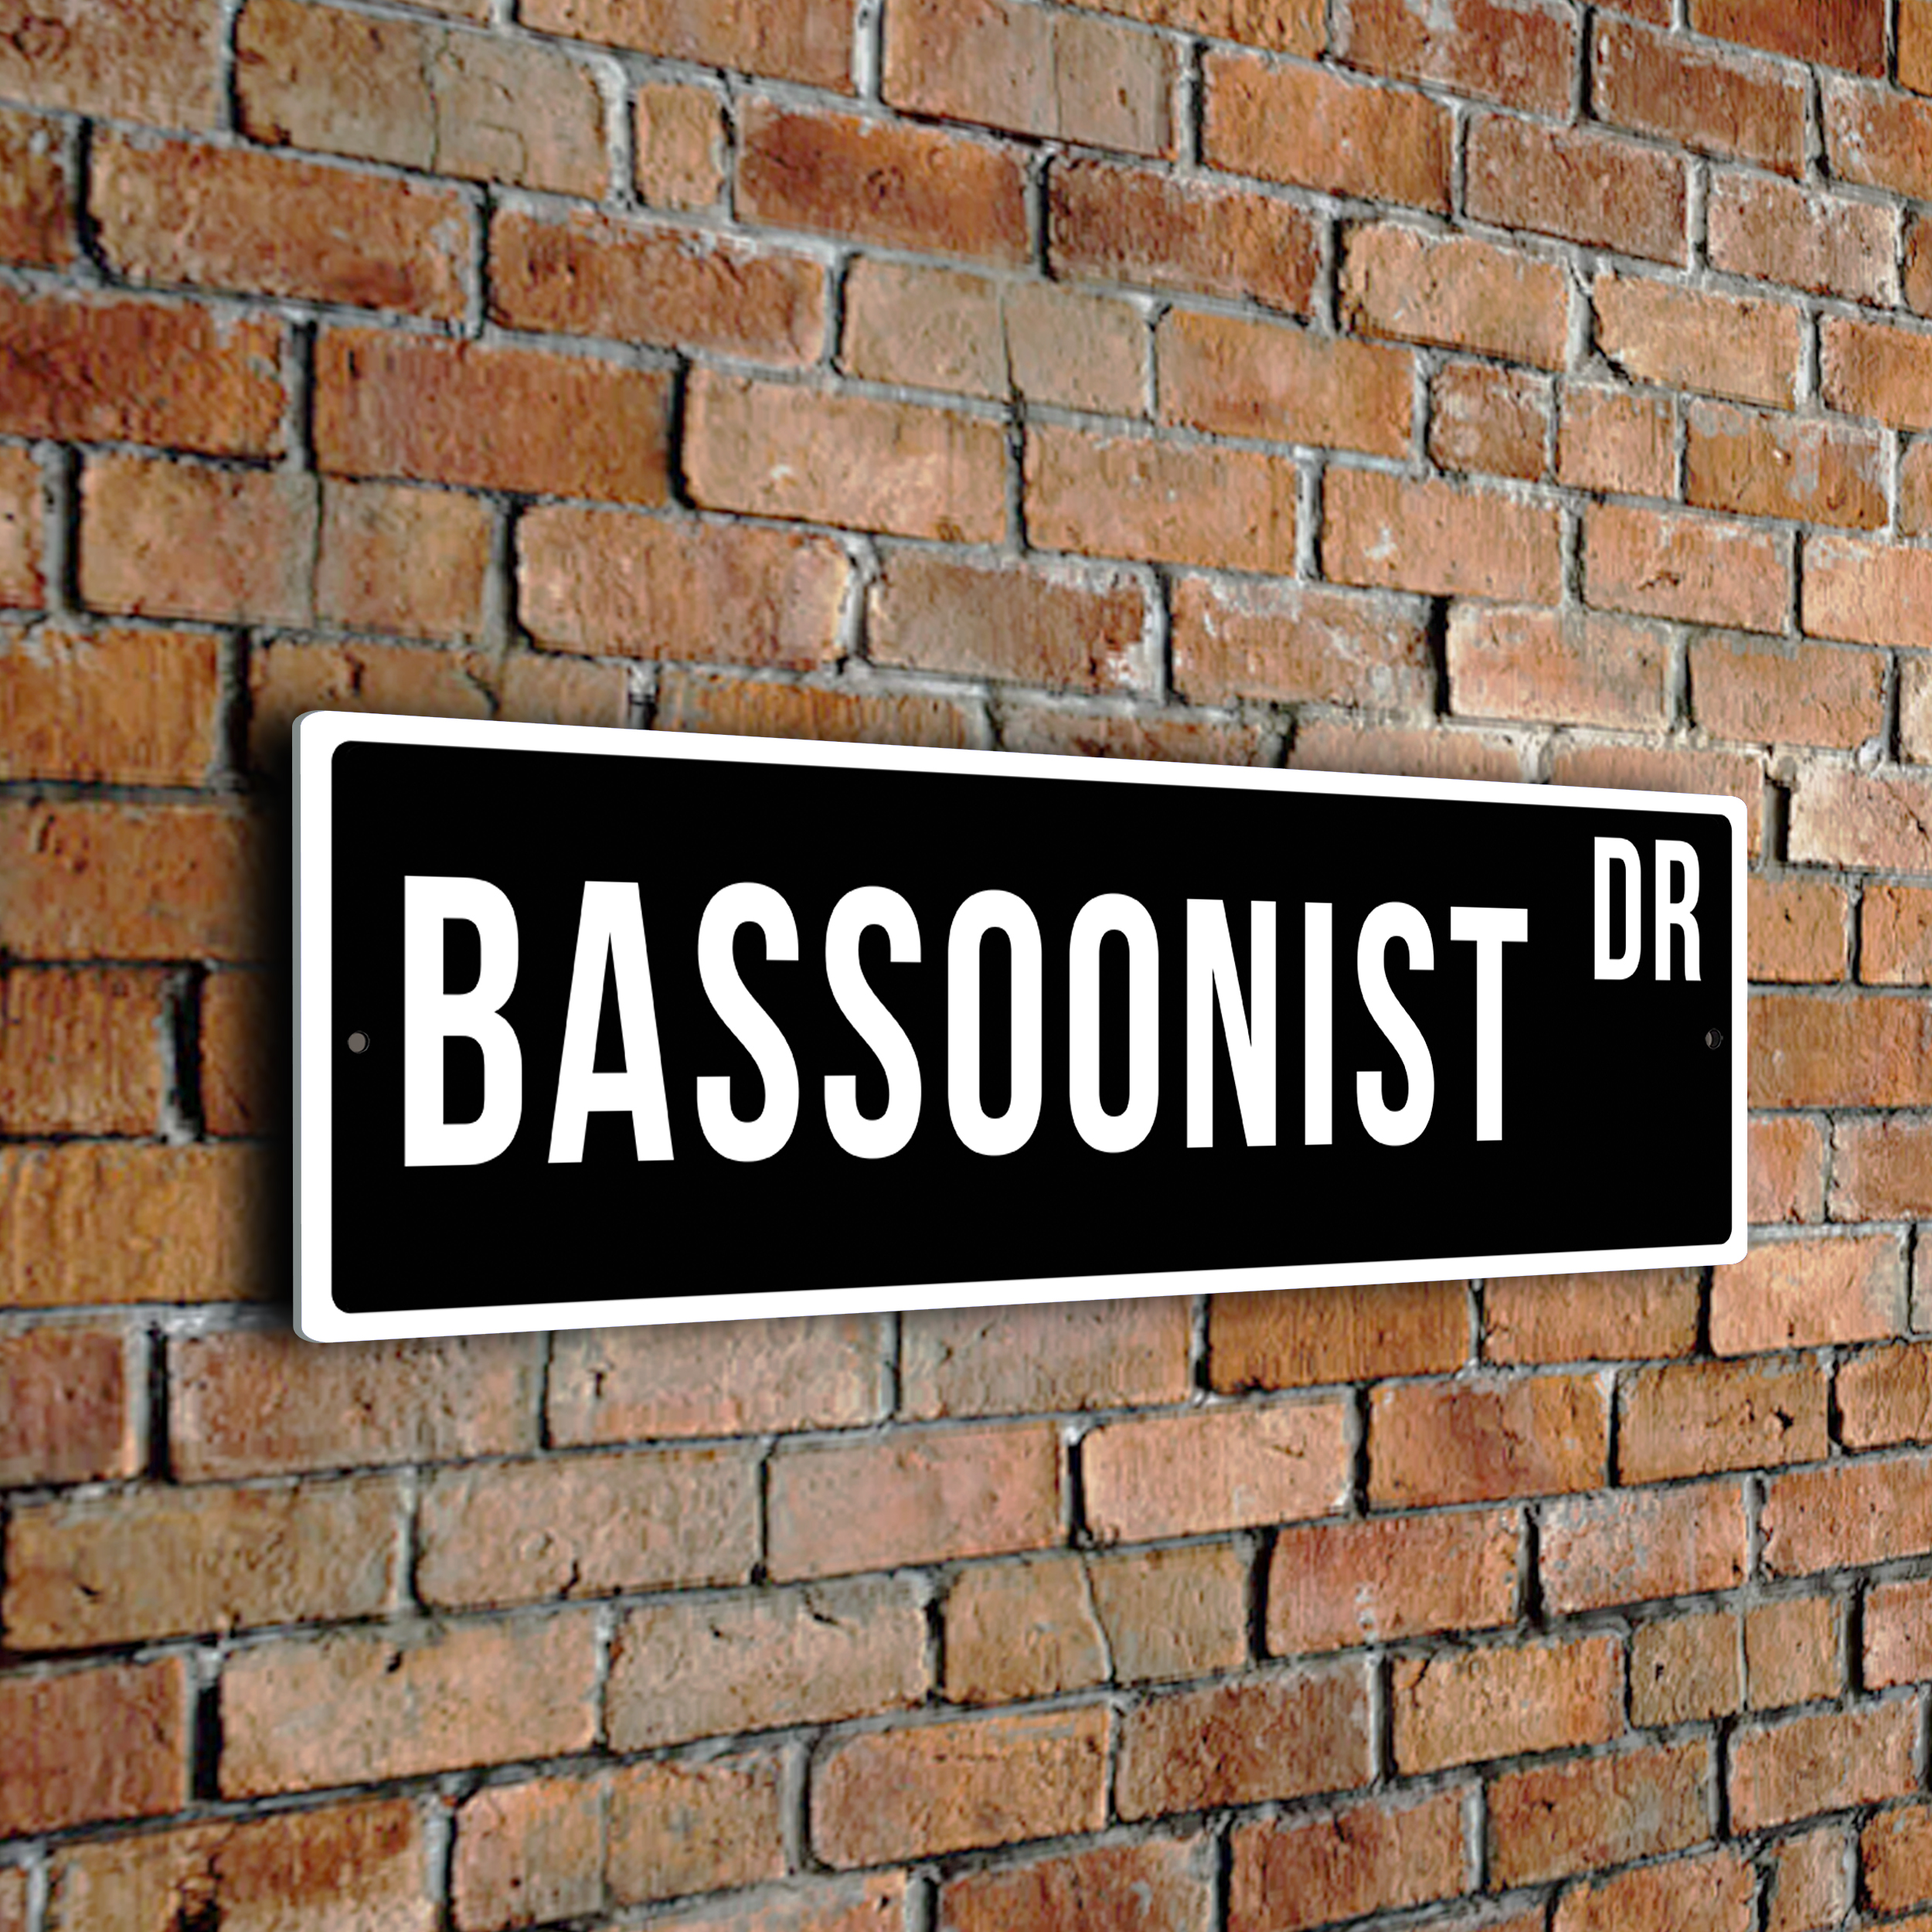 Bassoonist street sign